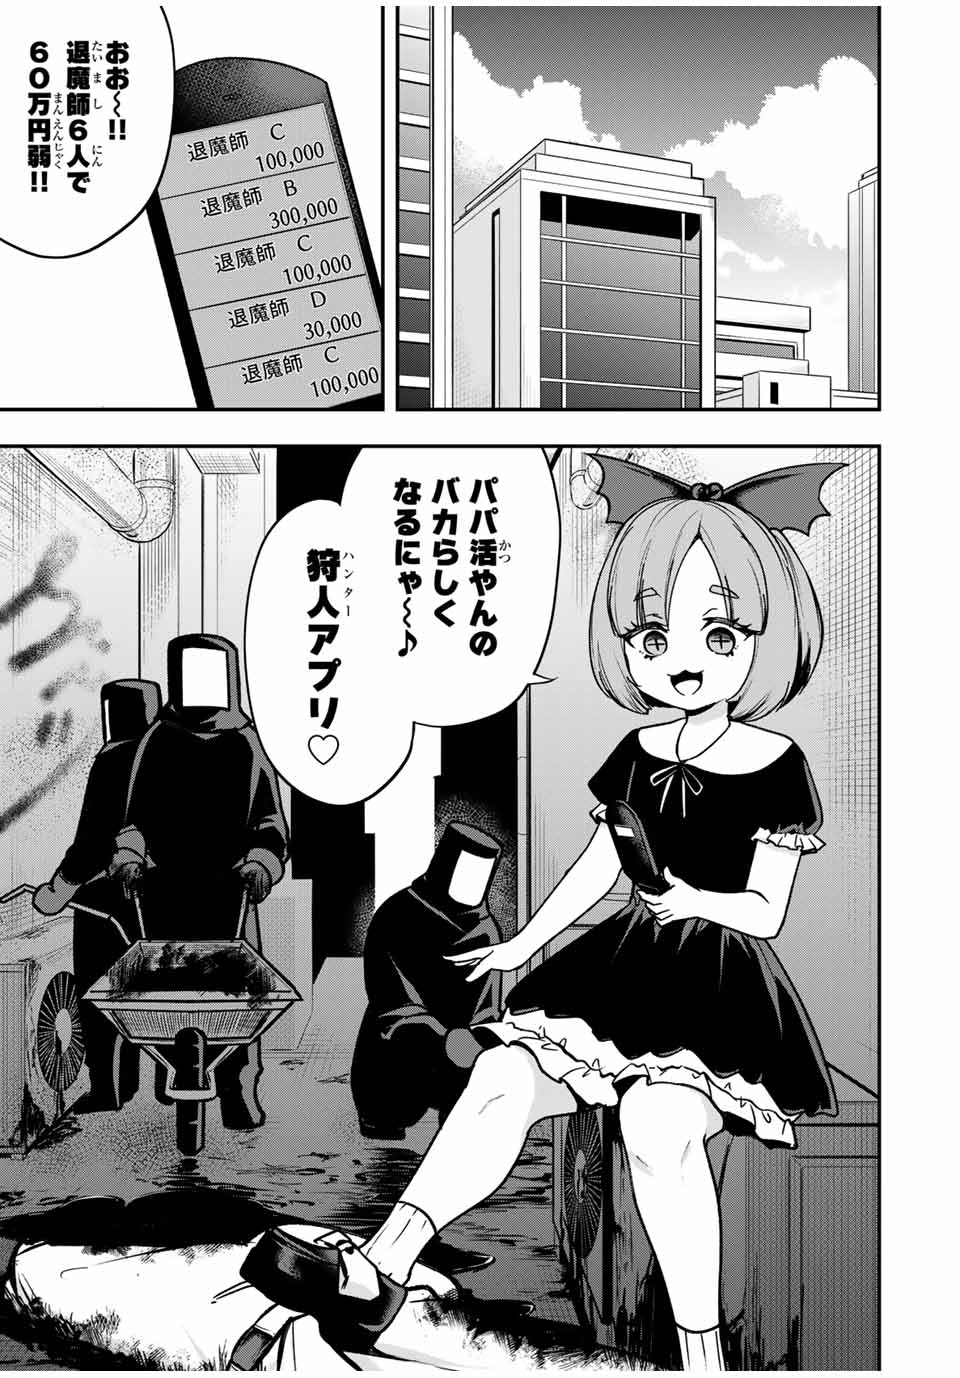 Heroine wa xx Okasegitai - Chapter 10 - Page 25